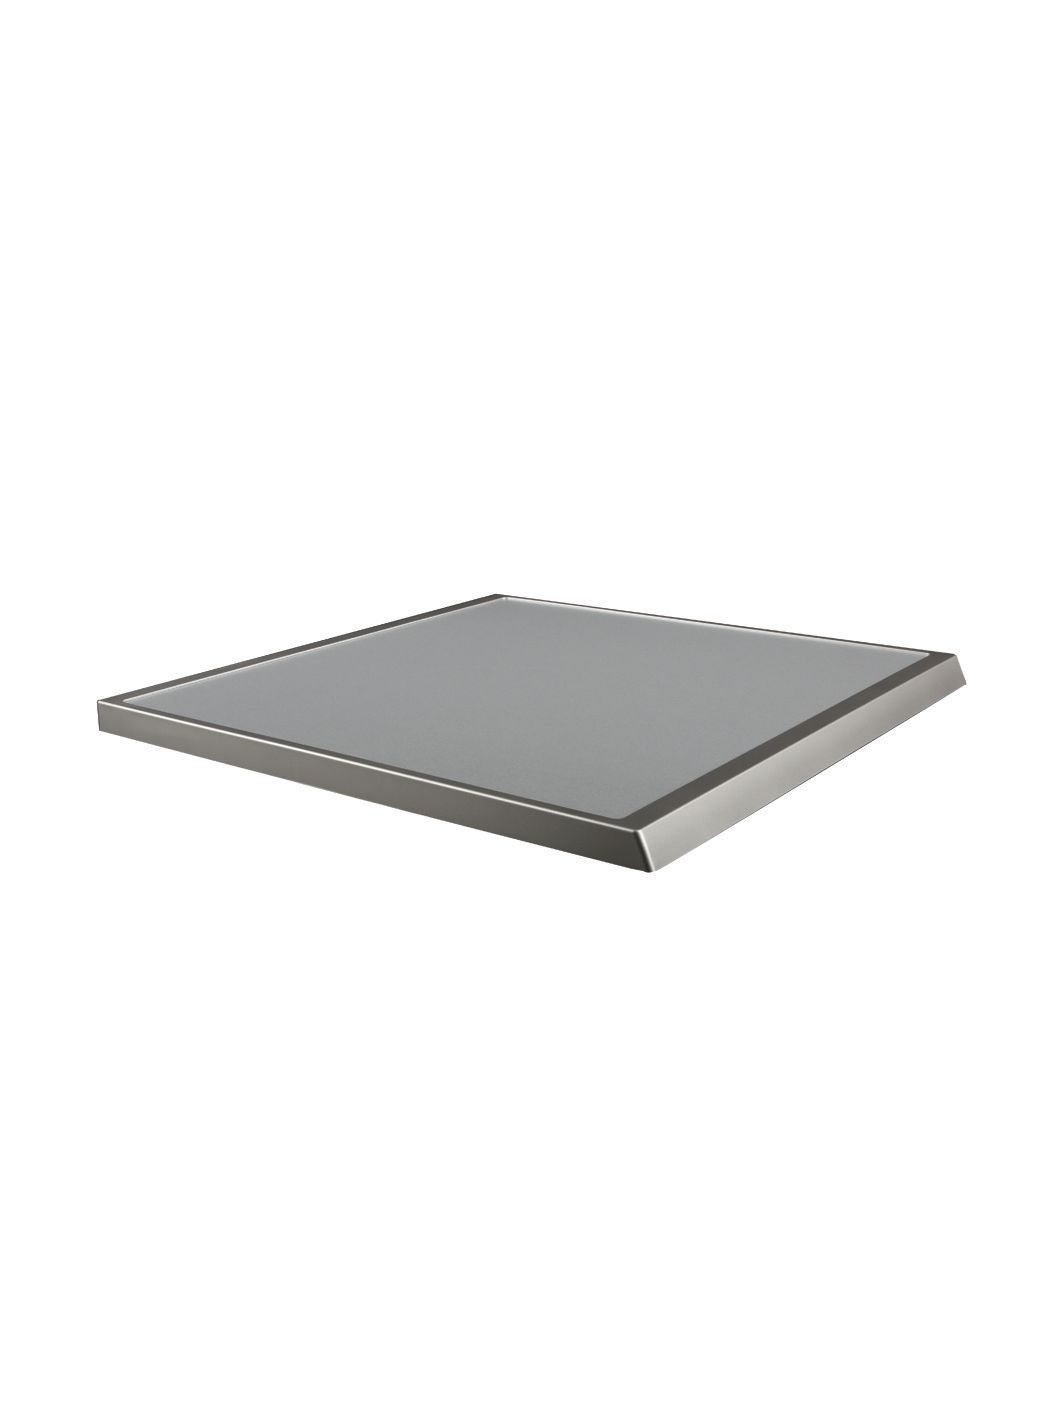 Tischplatte Silber-640B- SE-39171- dekorplatin V2 (KD-00145366)